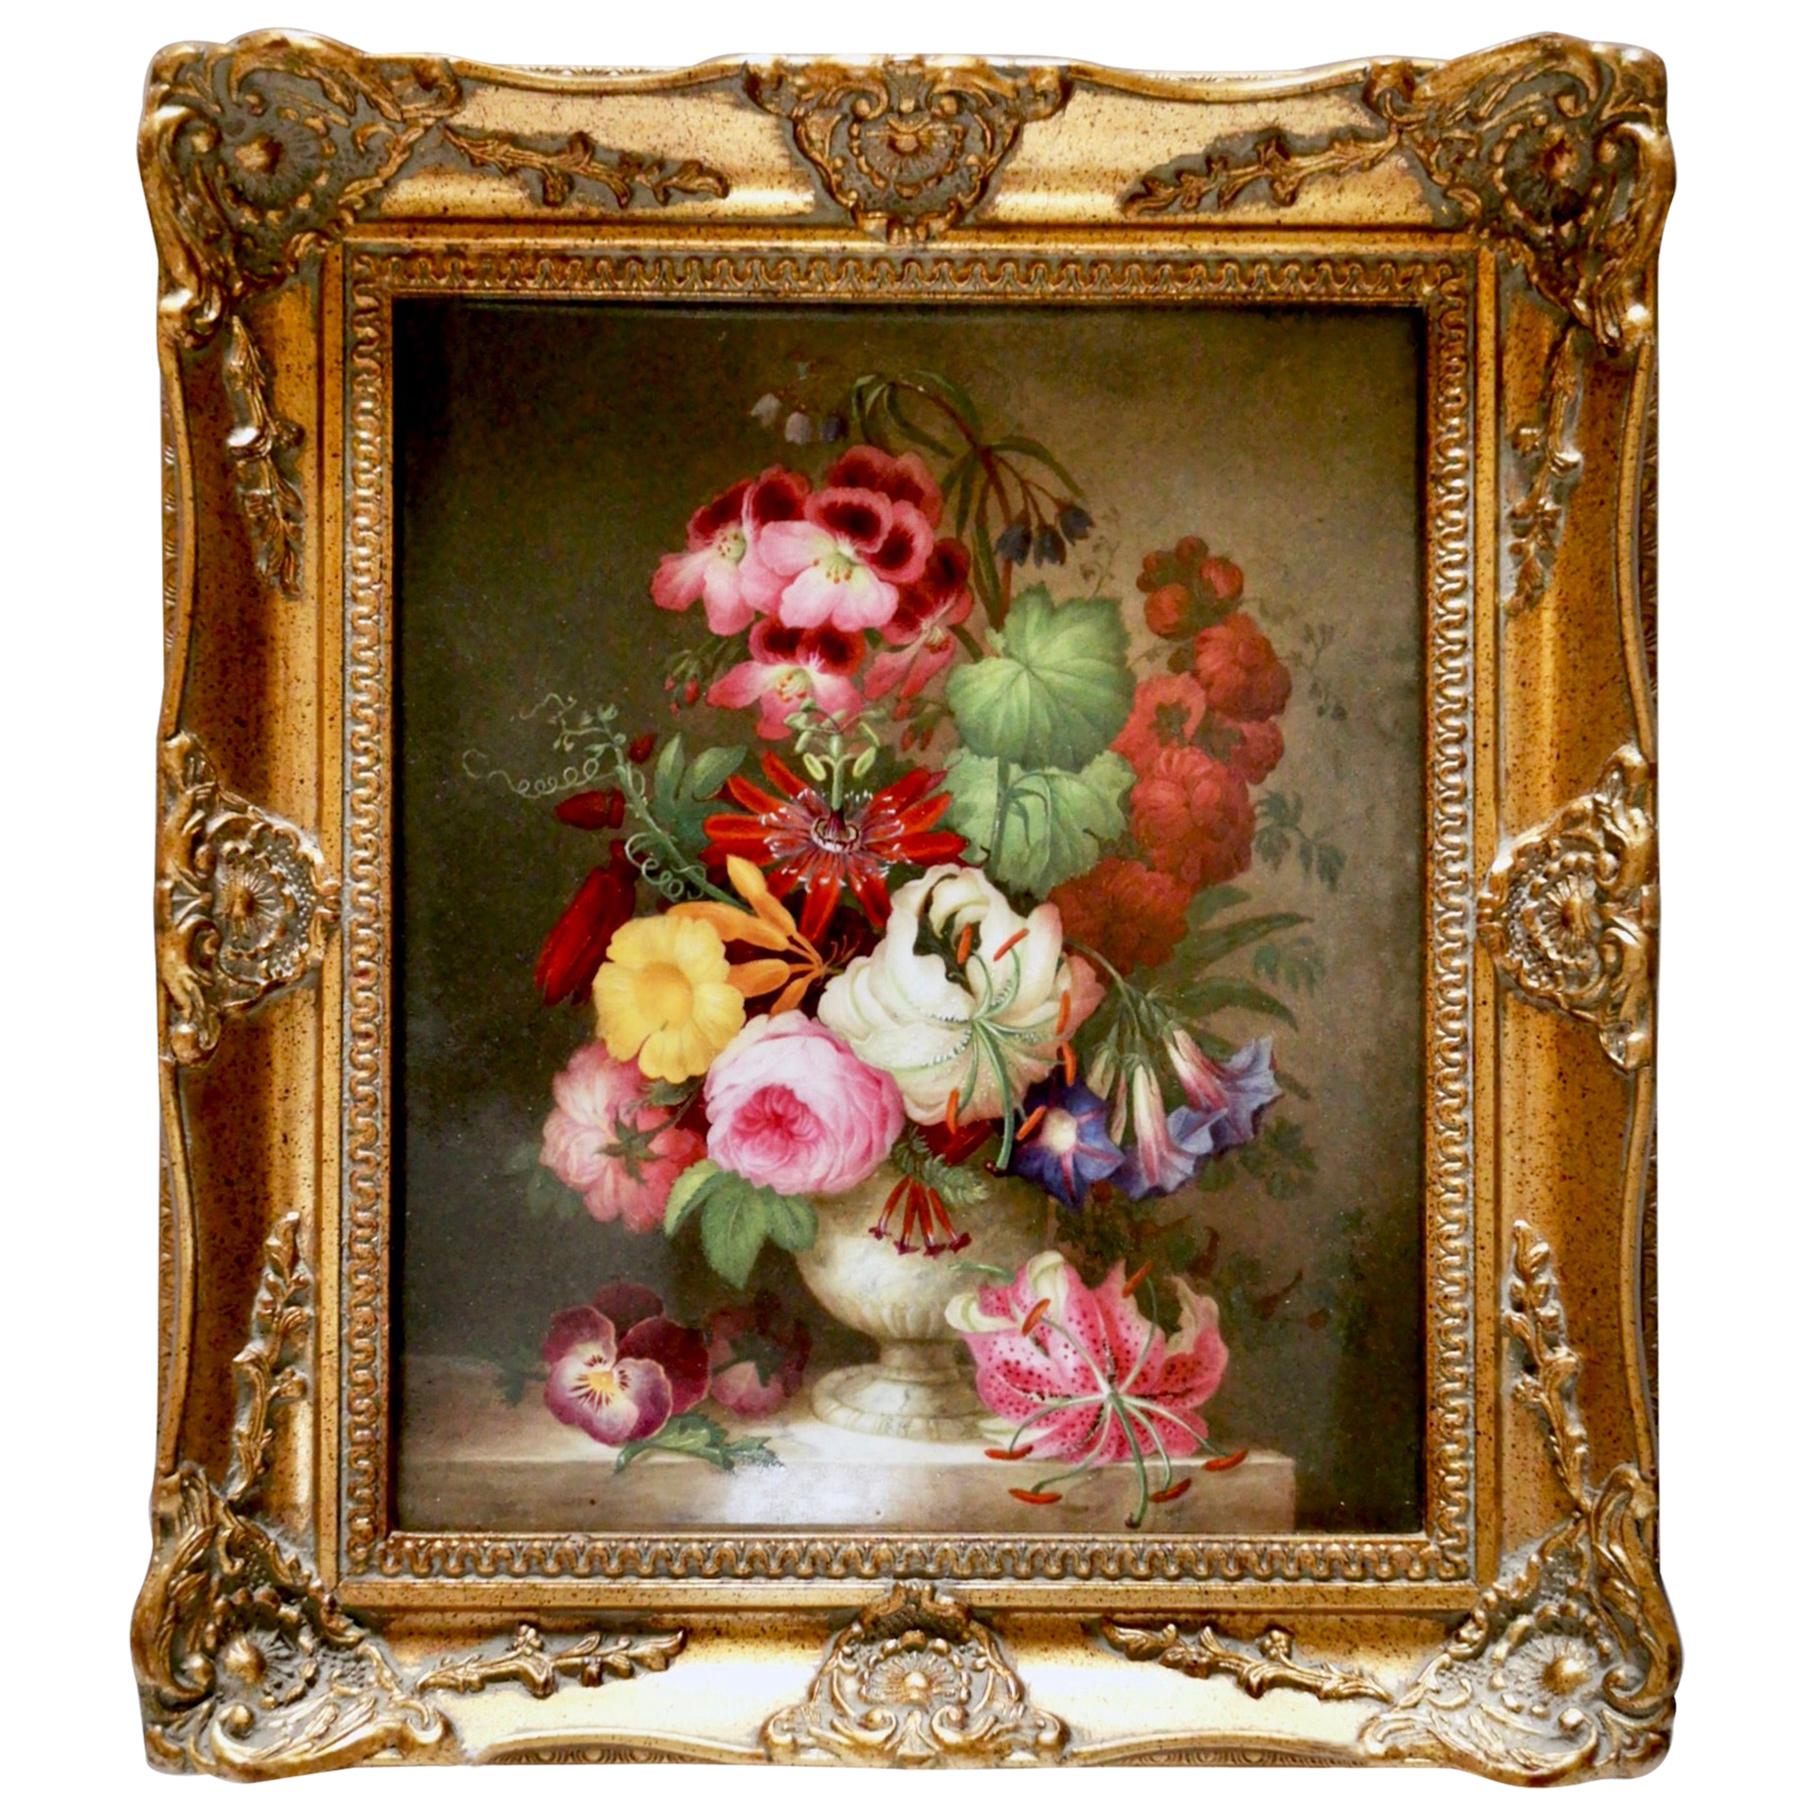 Coalport Framed Porcelain Plaque of Flower Bouquet, Victorian, circa 1840